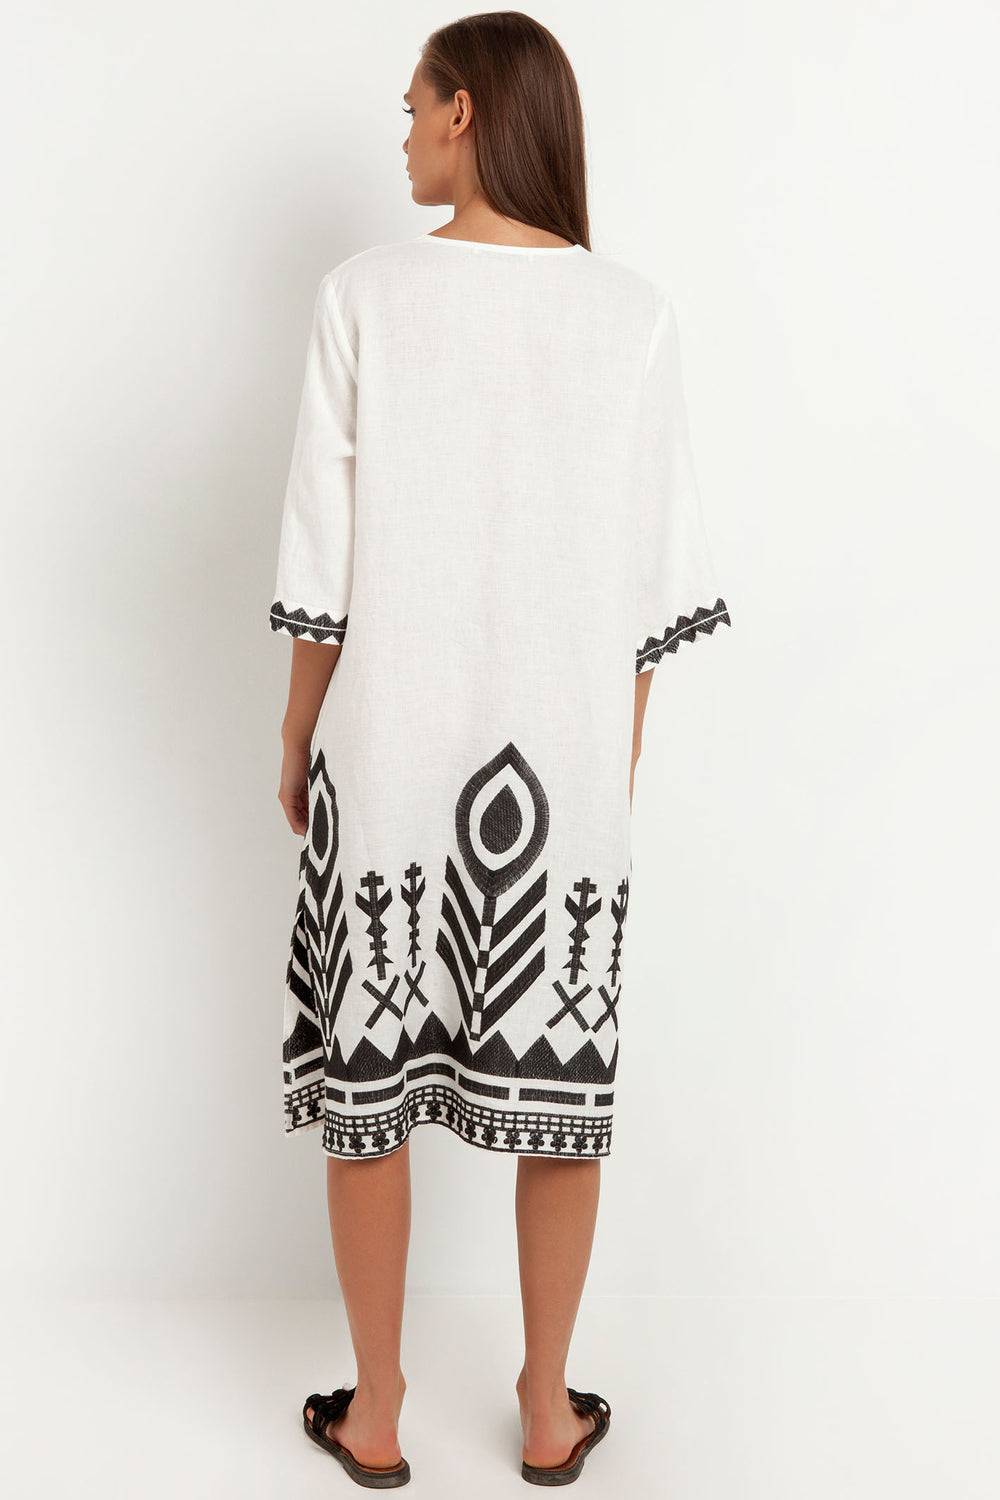 Greek Archaic Kori 230676 White Black V-Neck Feather Embroidered Linen Dress - Olivia Grace Fashion